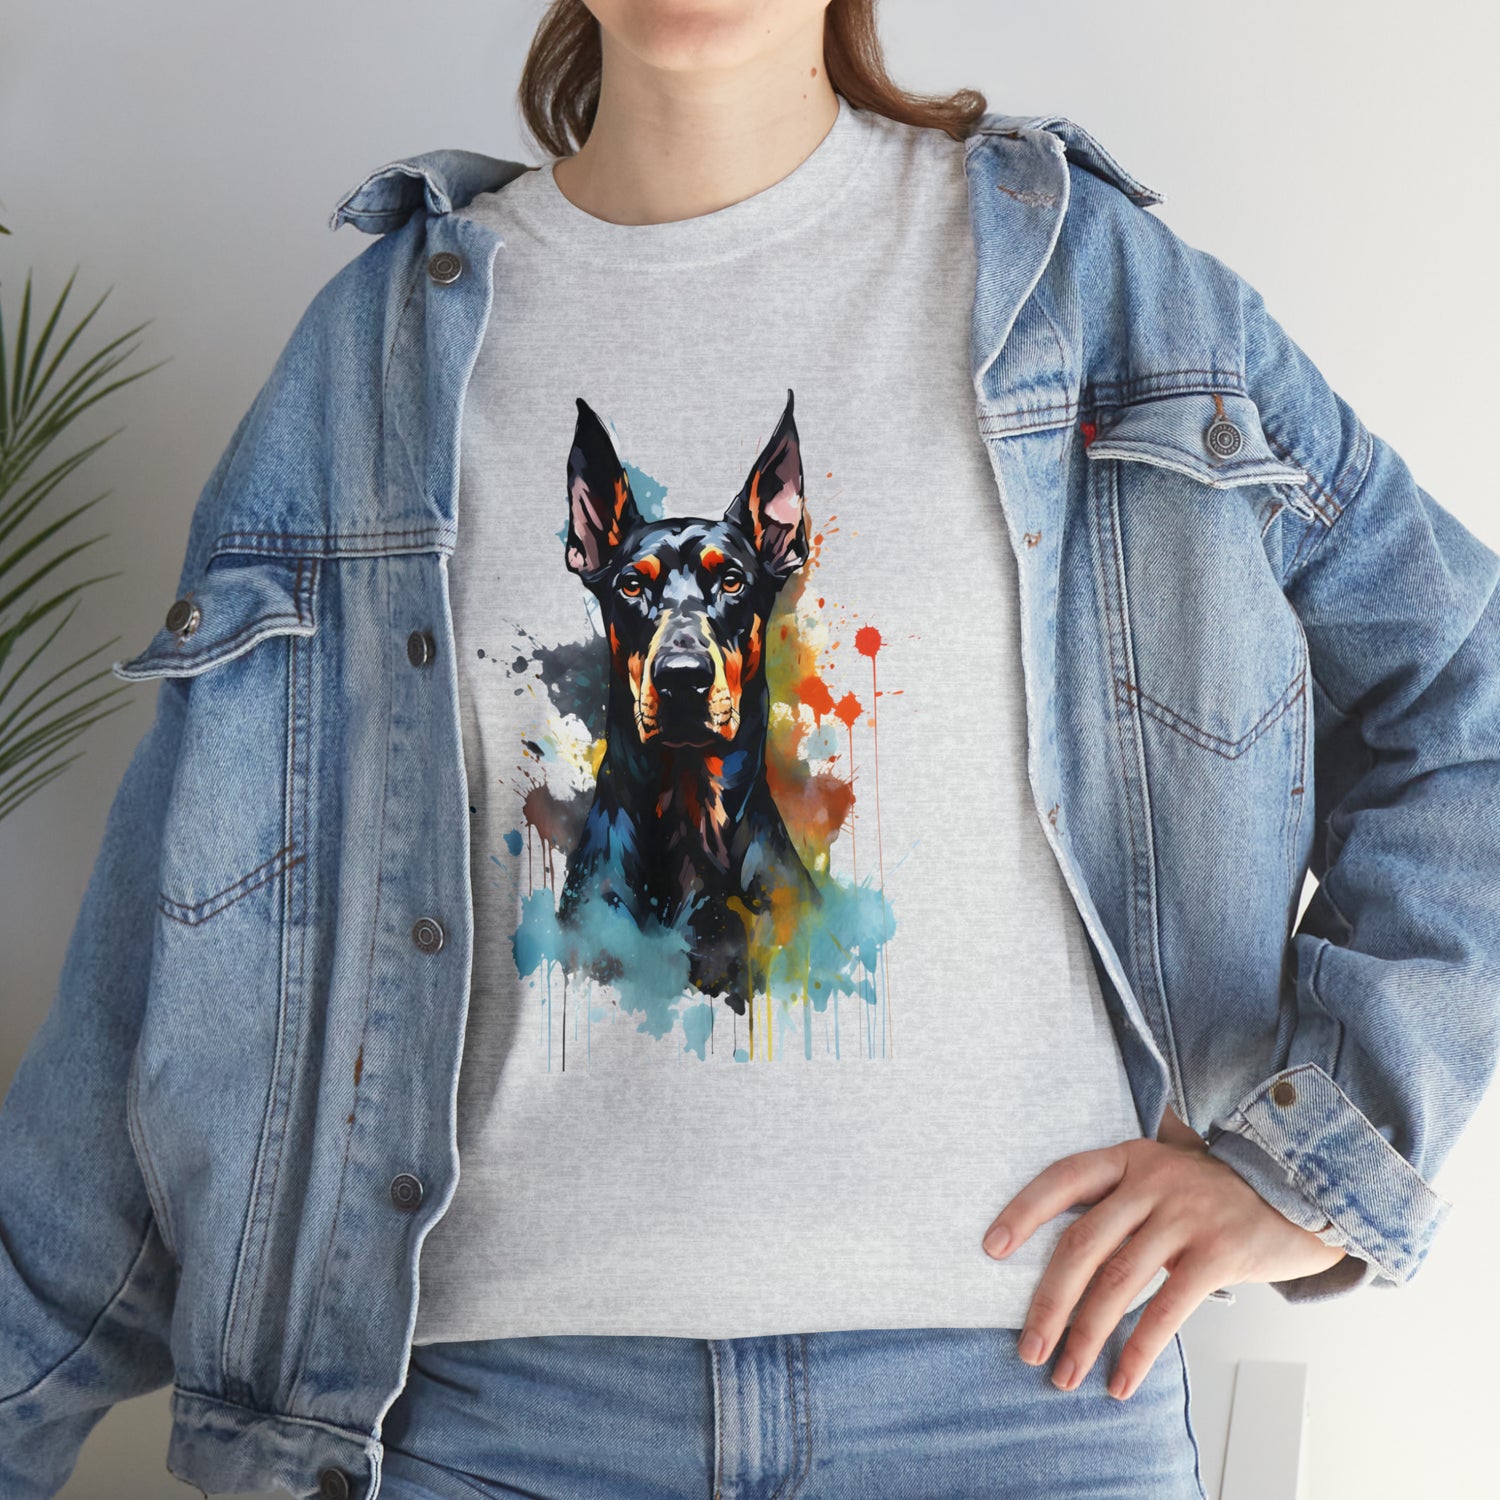 Doberman T-Shirt, Watercolor Doberman, Doberman Art Shirt, Dog Lover Apparel, Unisex Heavy Cotton Tee - CosmicDeva